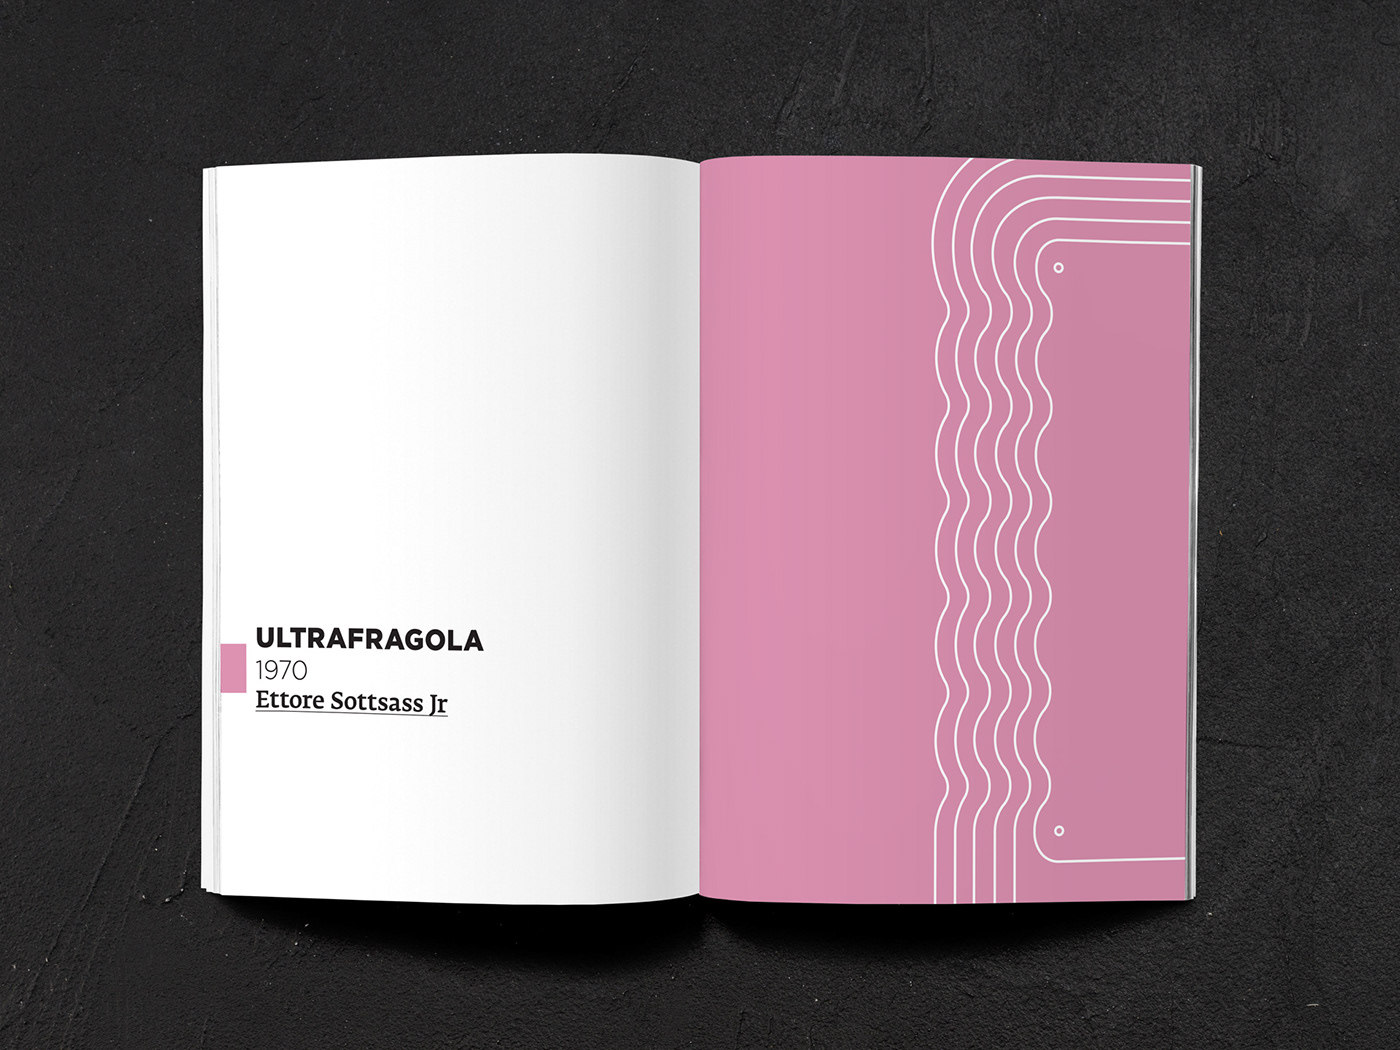 Poltronova Catalogue catalogo Centro studi Poltronova visual design design print design 